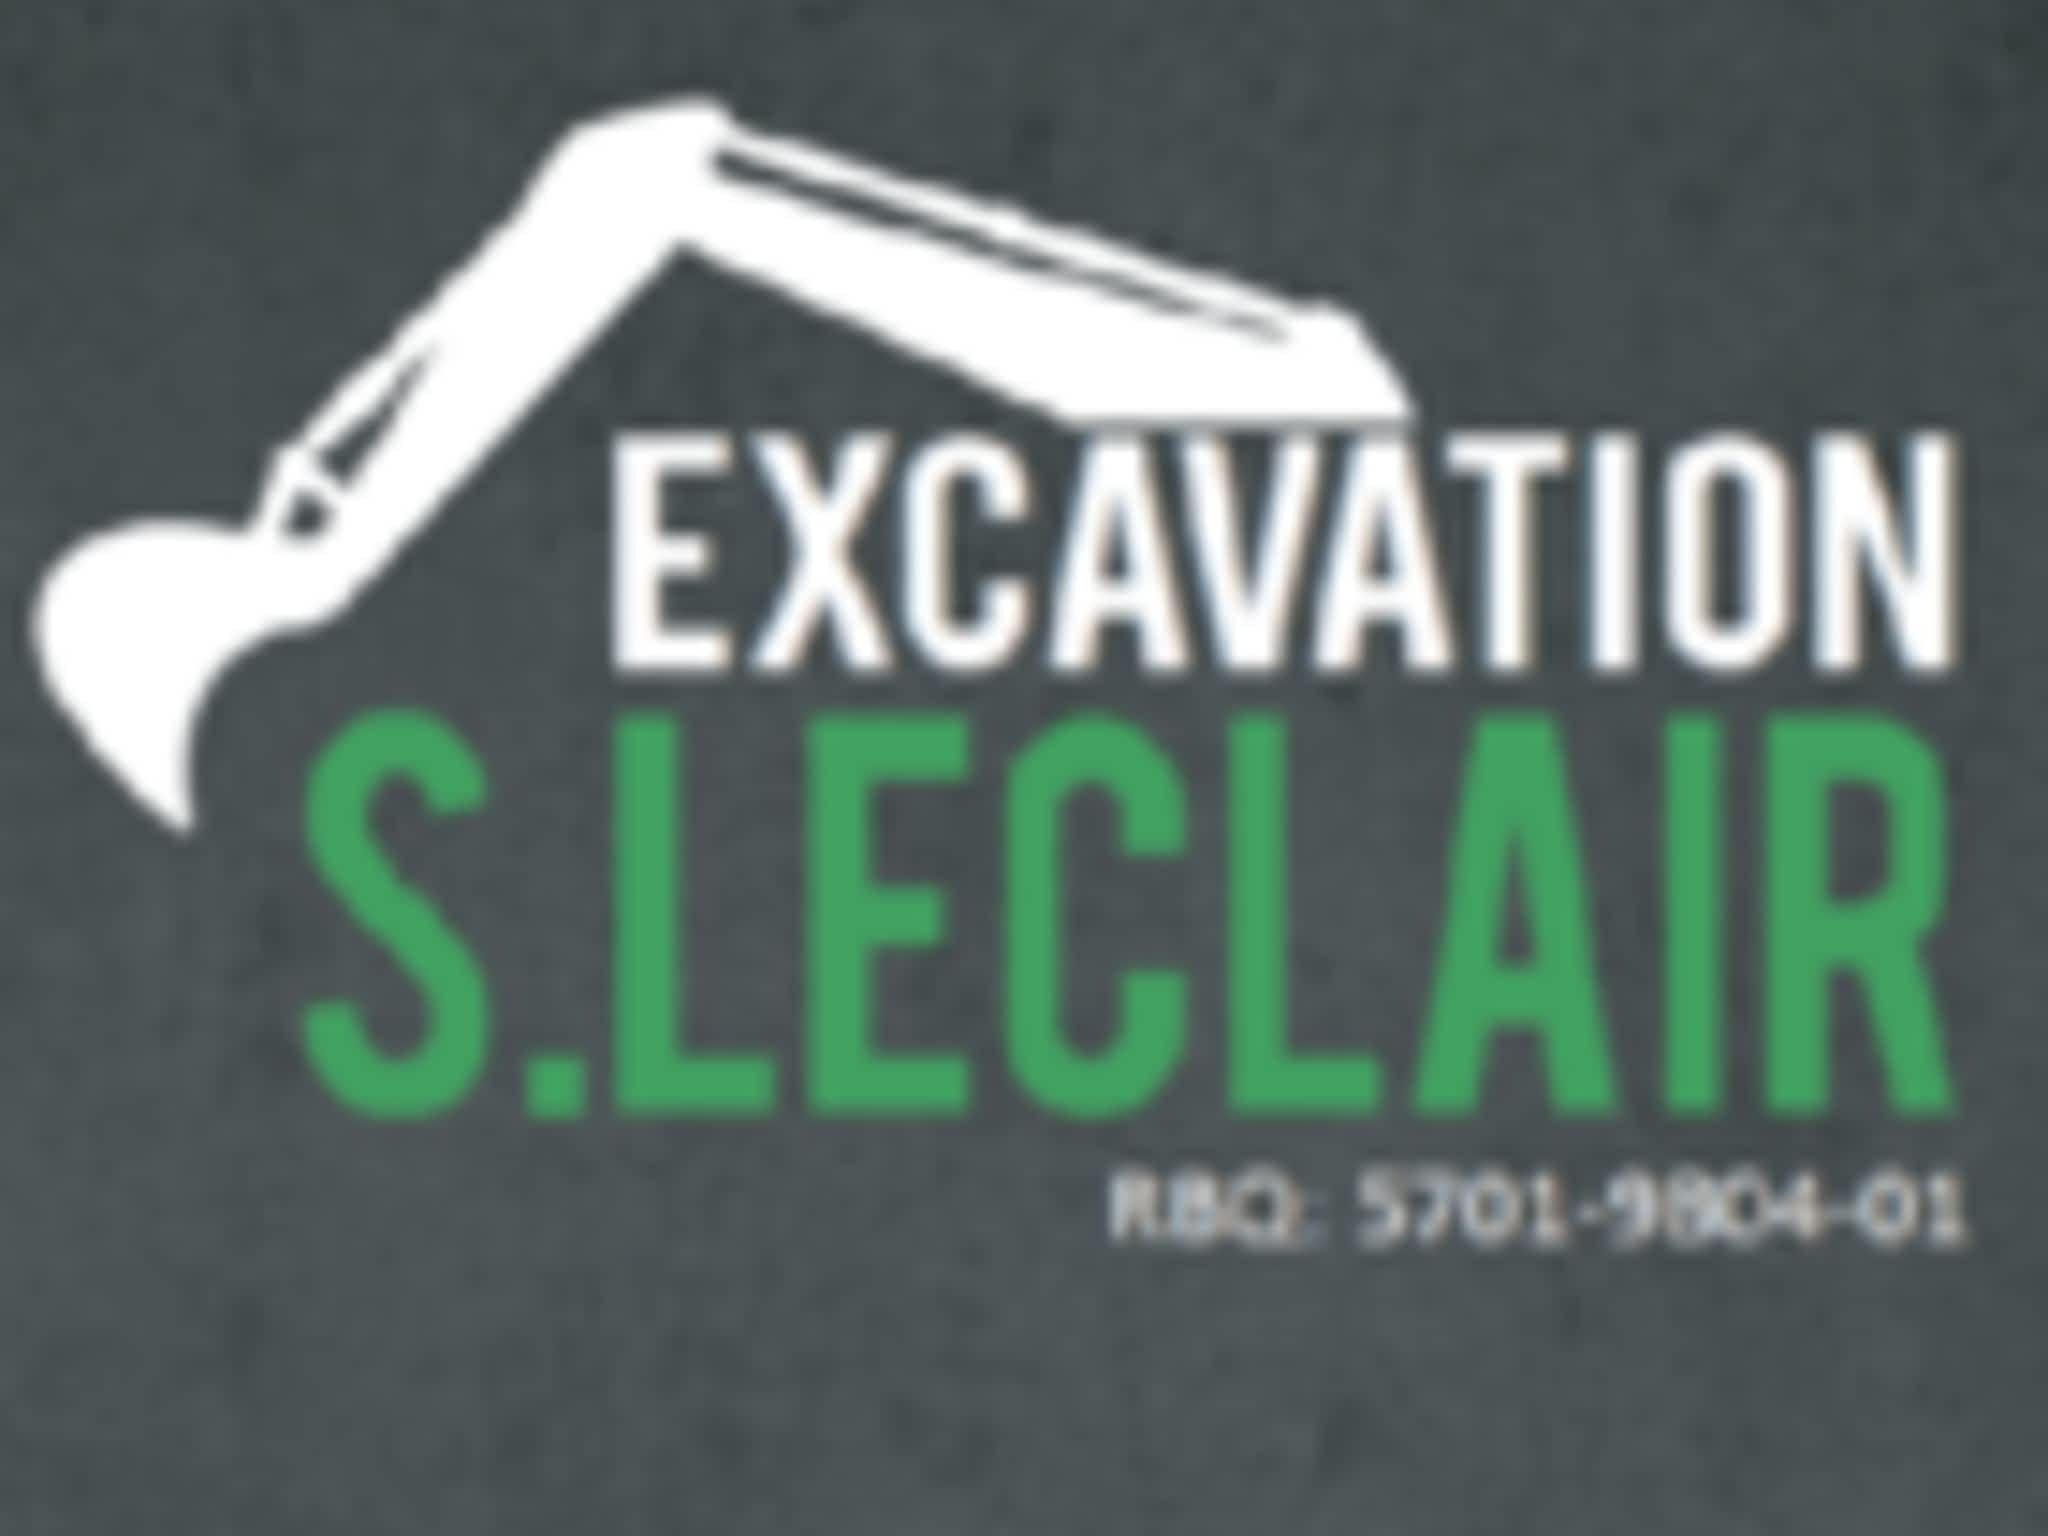 photo Excavation S. Leclair Inc.